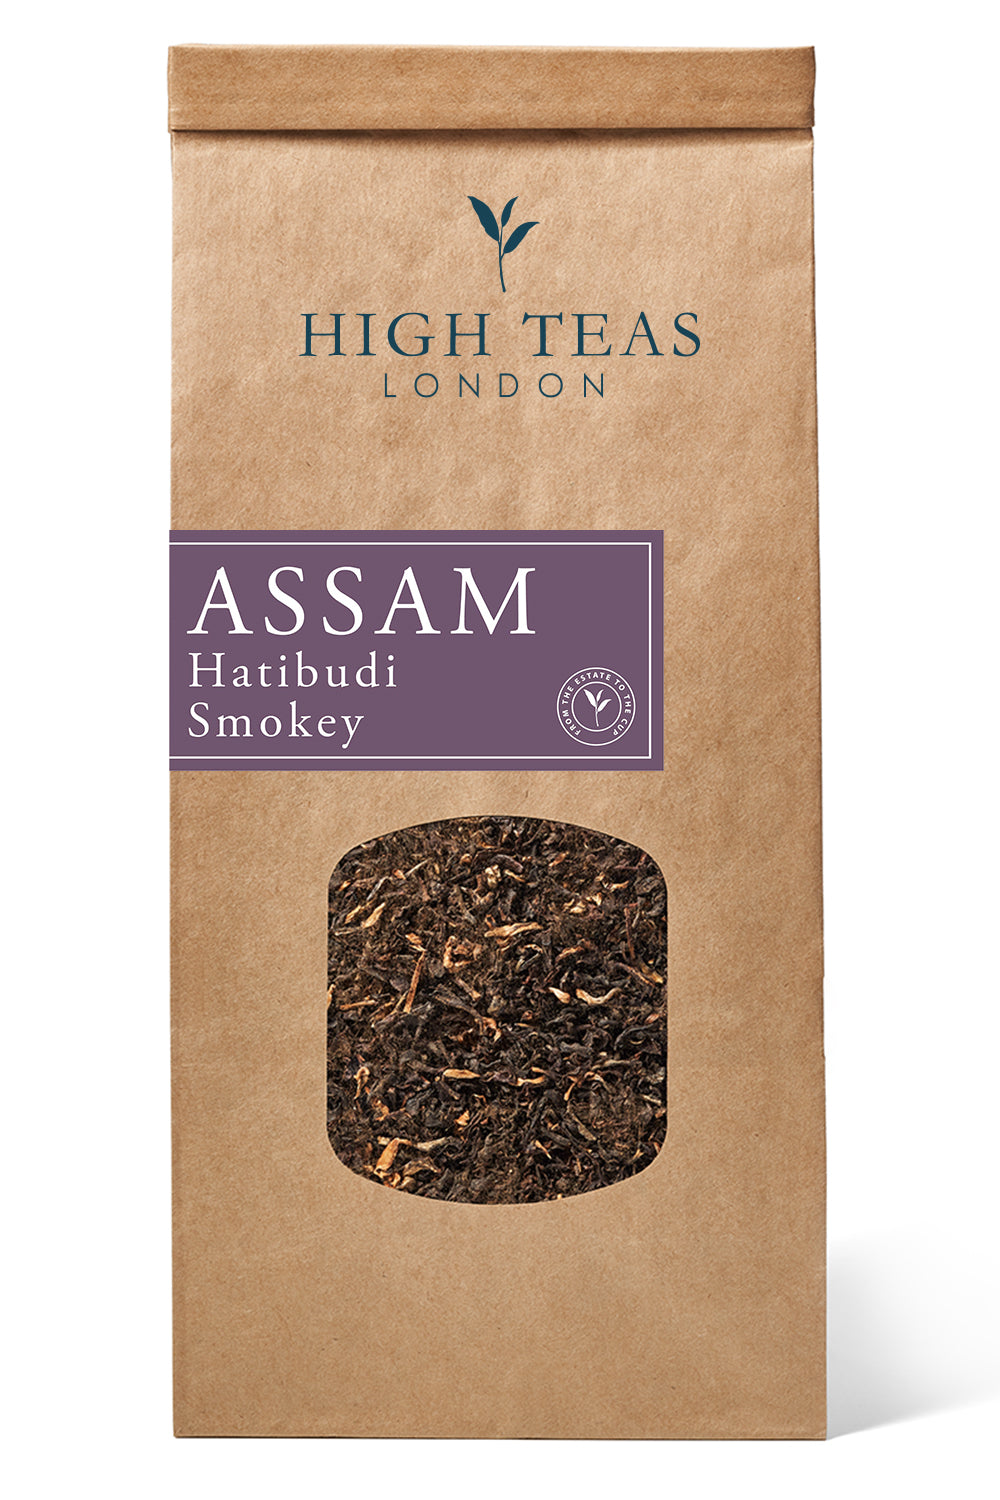 Assam Hatibudi Smoky-250g-Loose Leaf Tea-High Teas